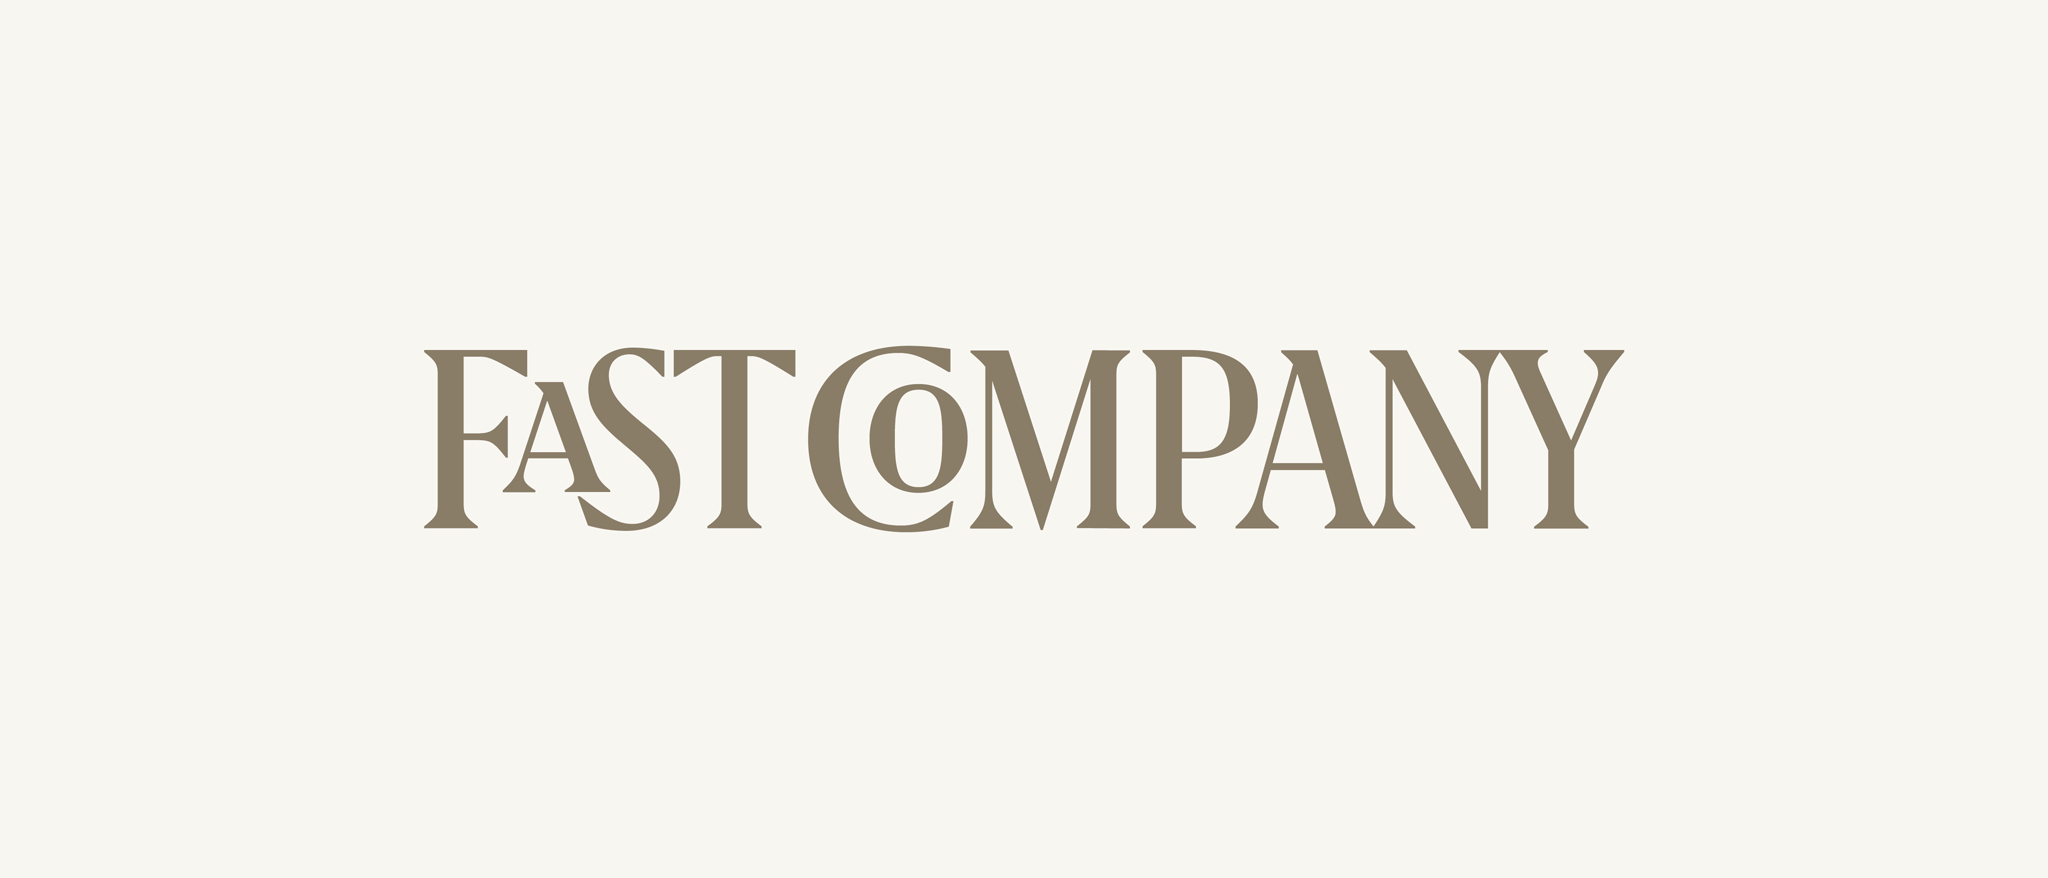 Fast Company Corporate Logo